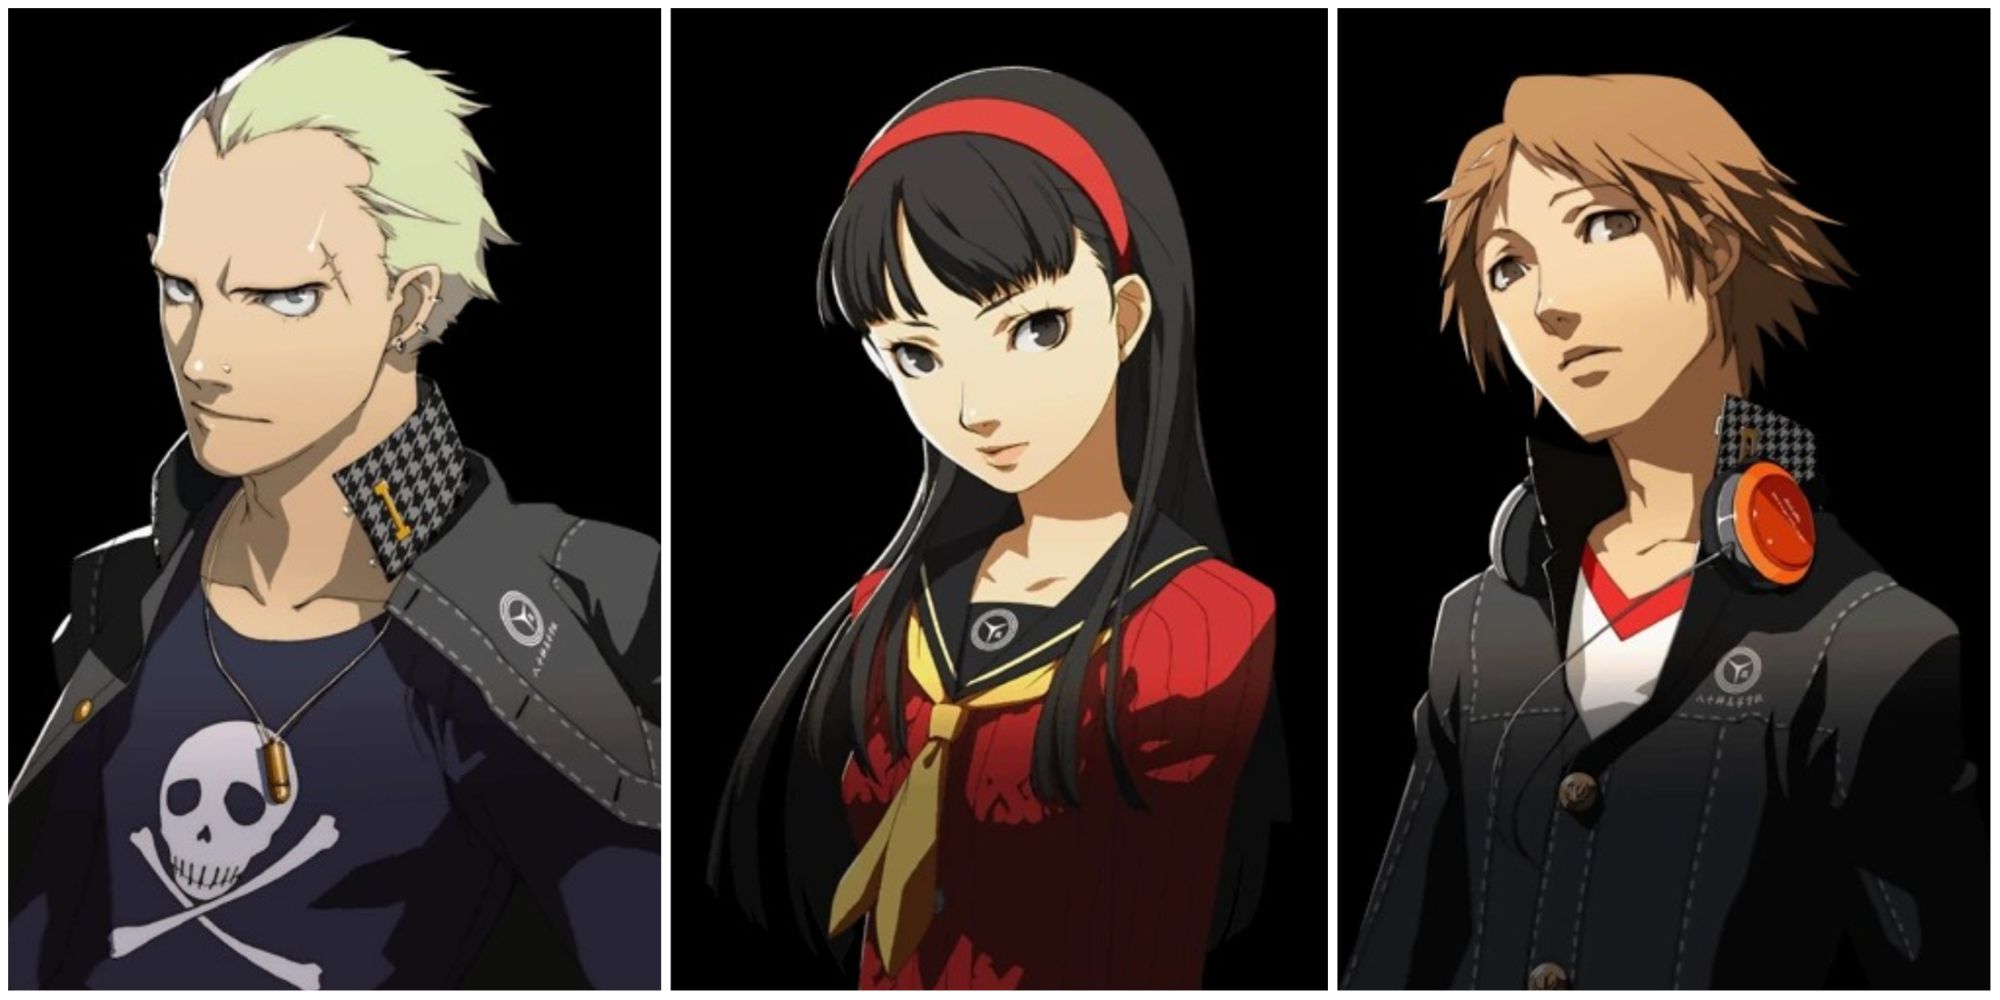 Kanji, Yukiko, and Yosuke from Persona 4